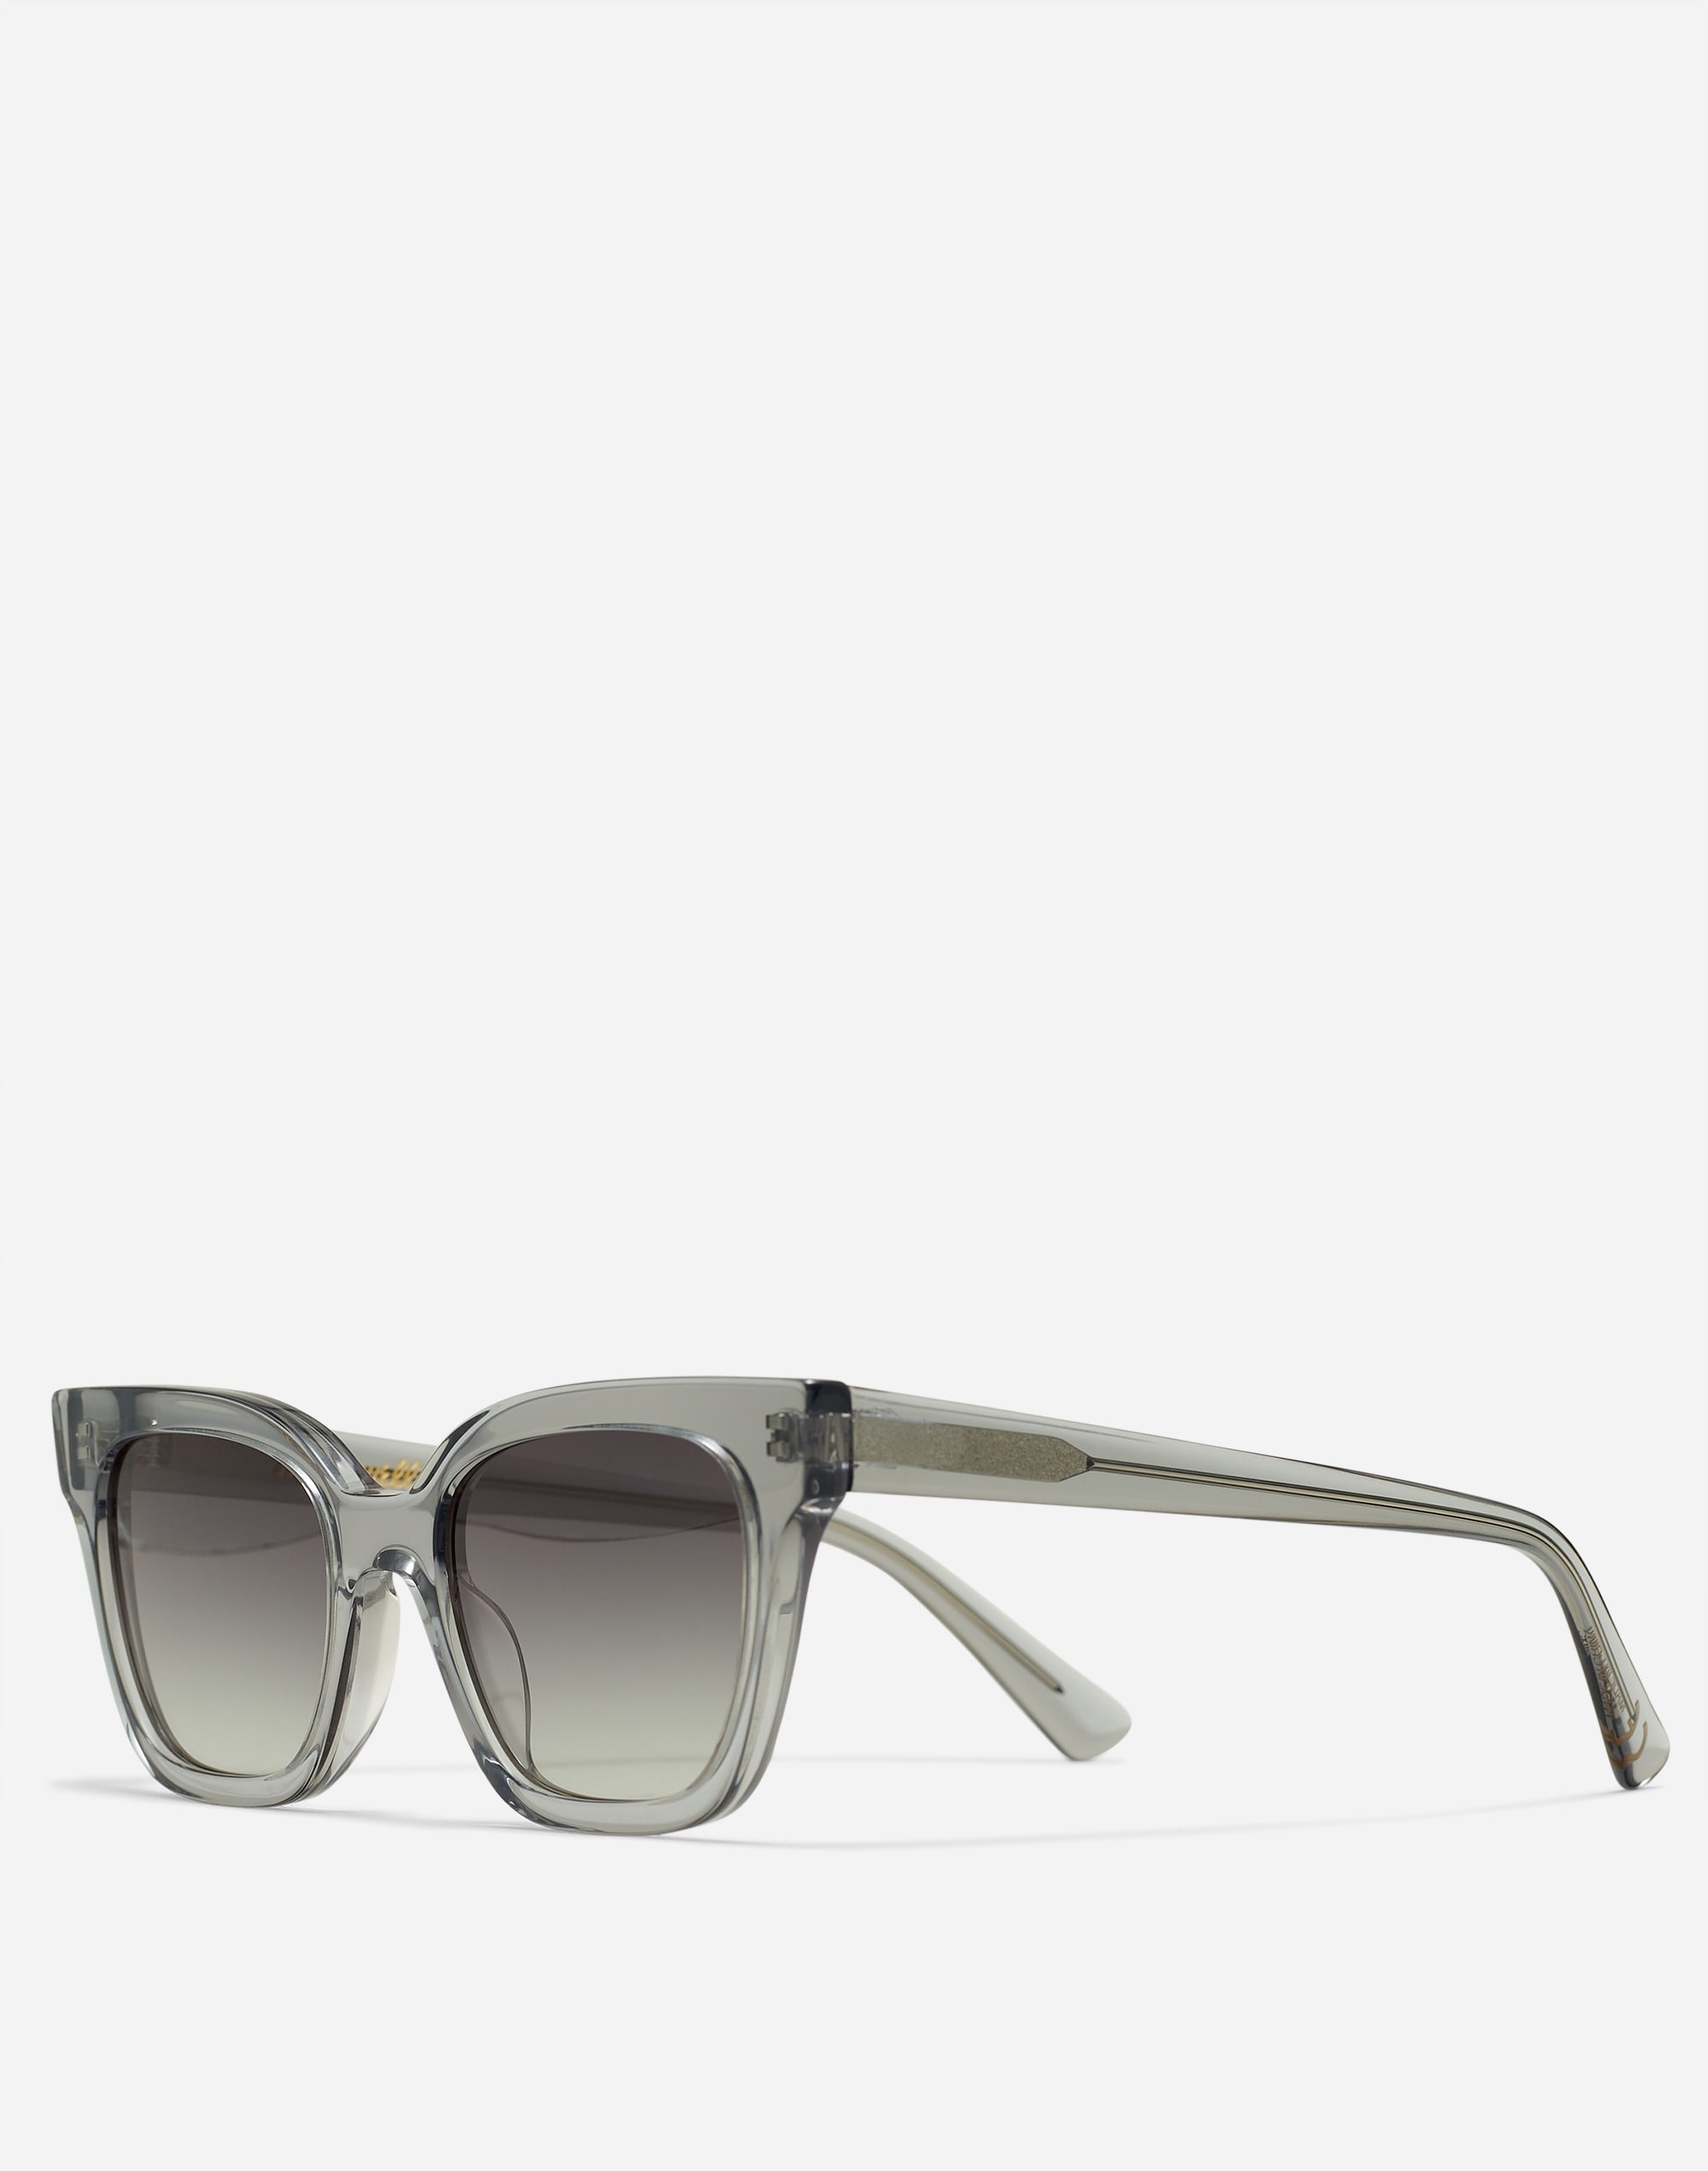 Mw Pierport Sunglasses In Dusk Grey